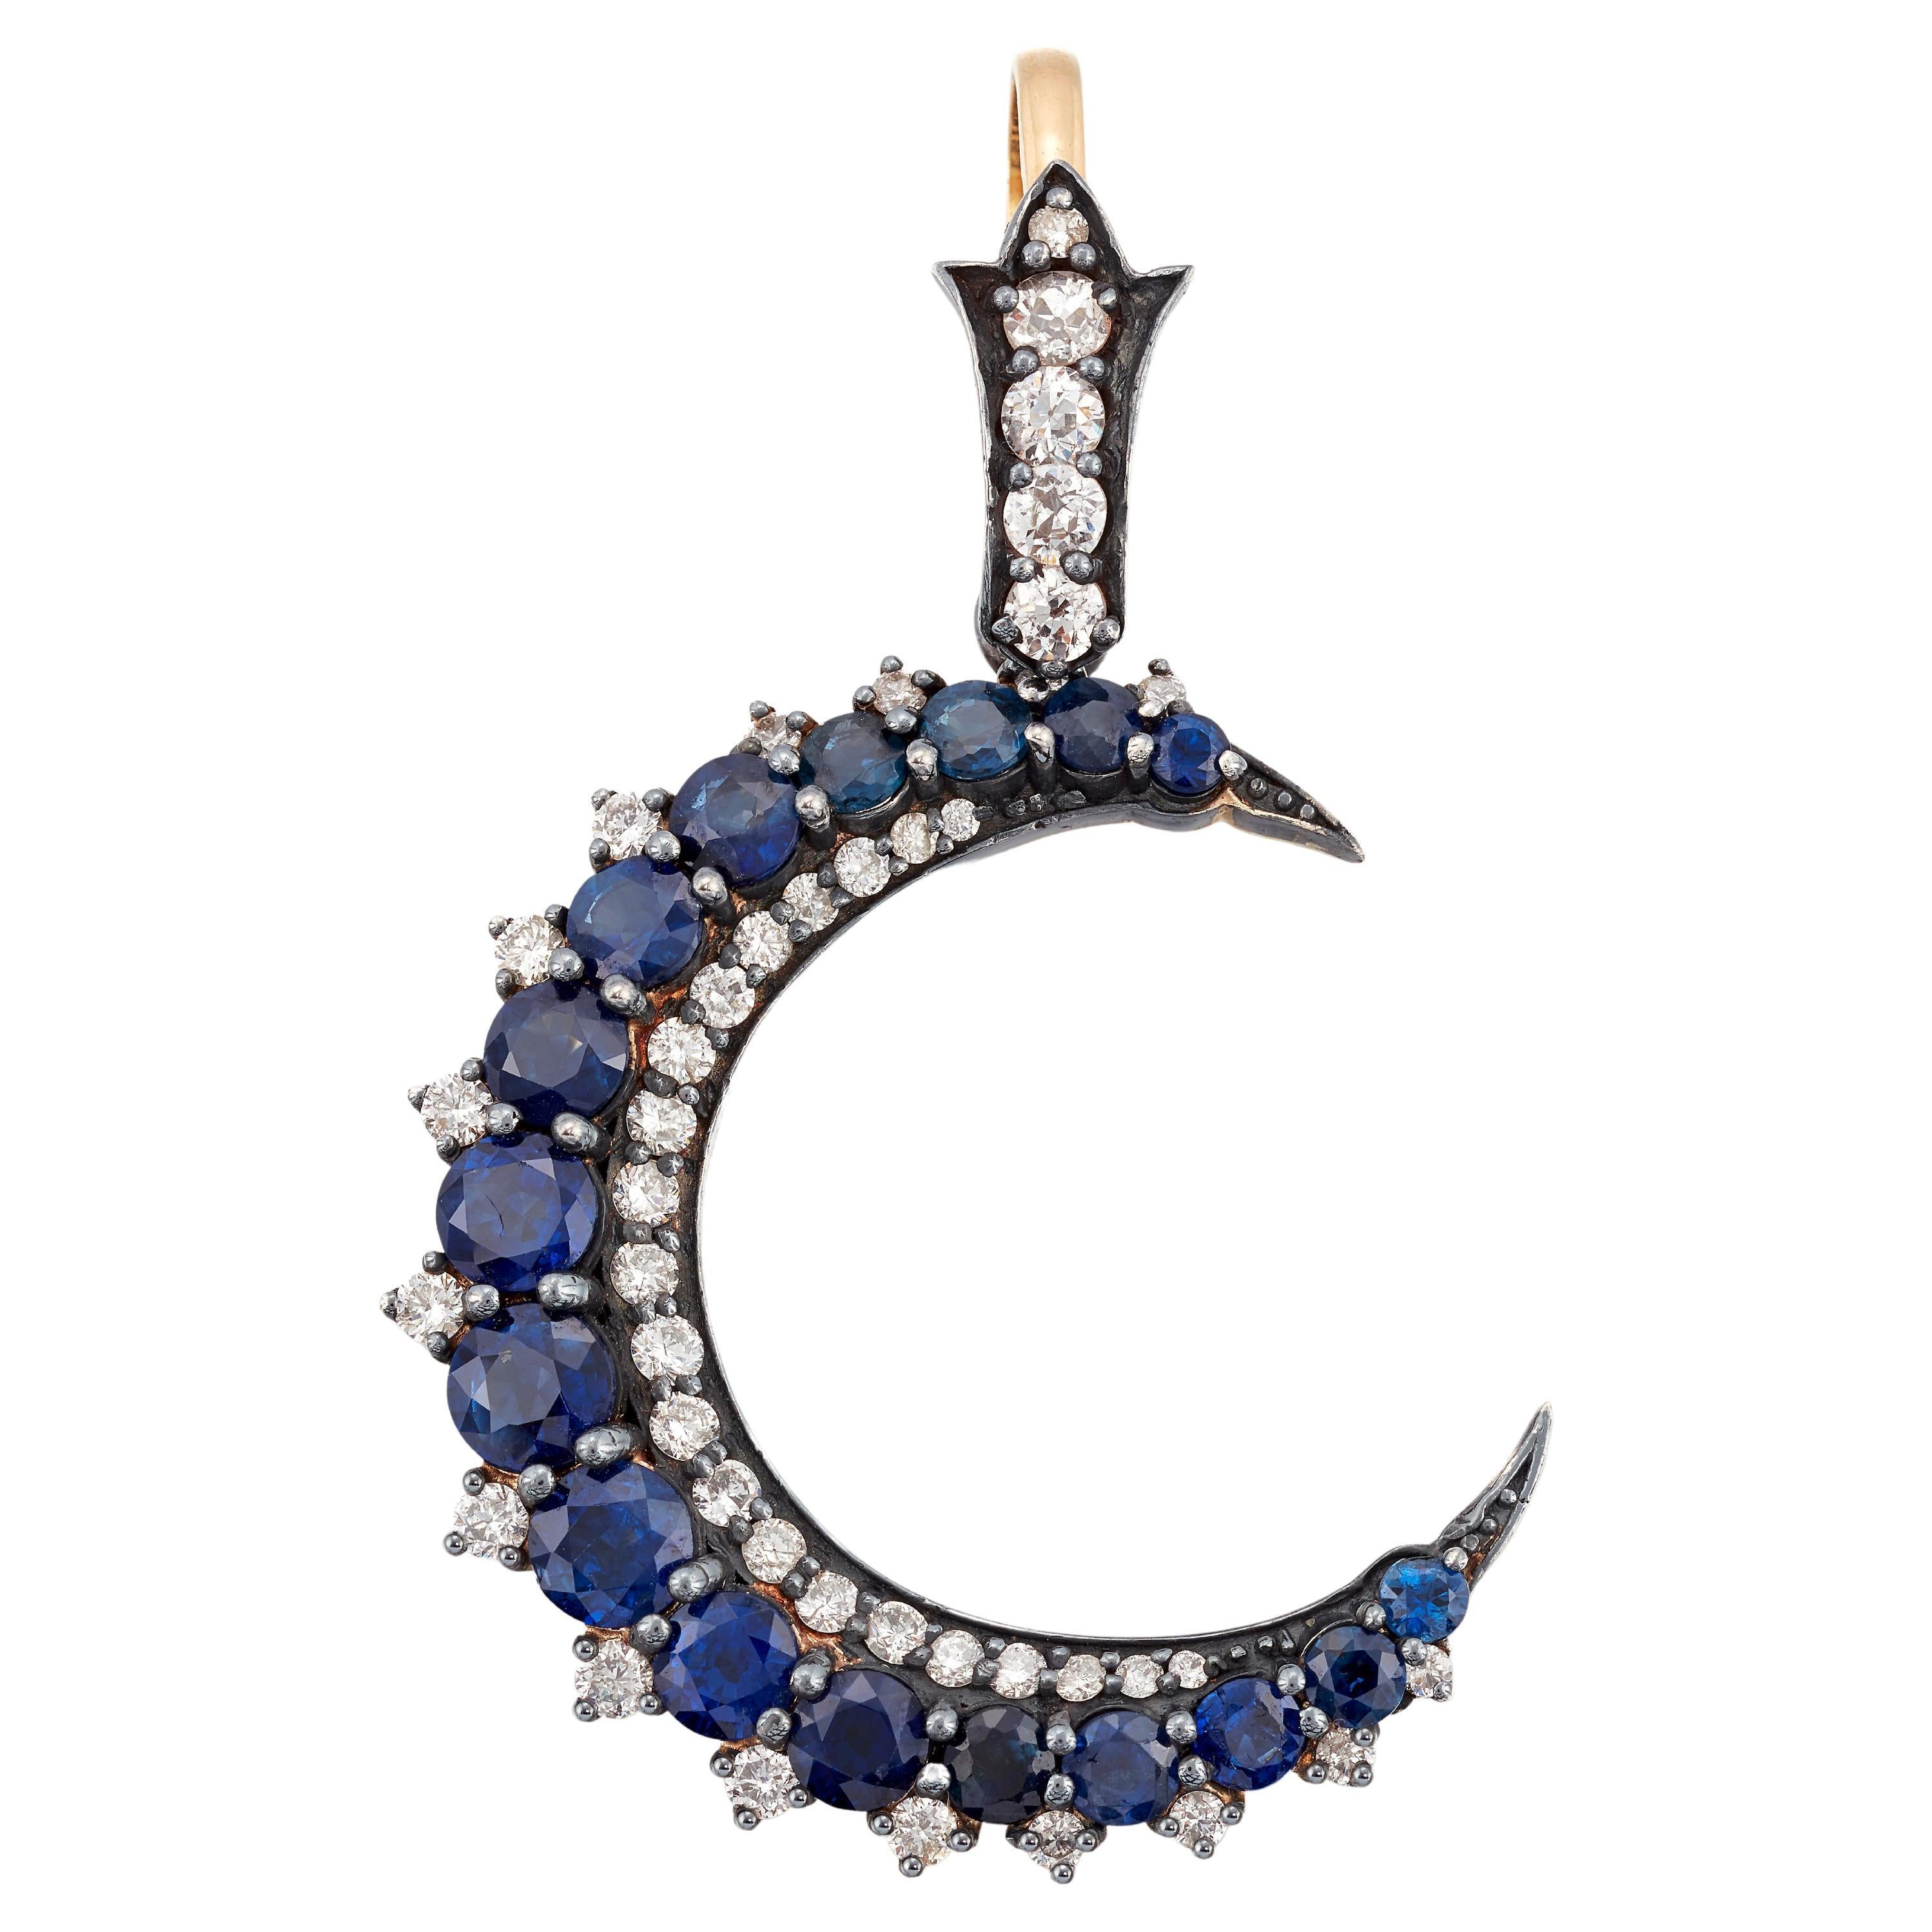 Beautiful Sapphire and Diamond crescent moon pendant.